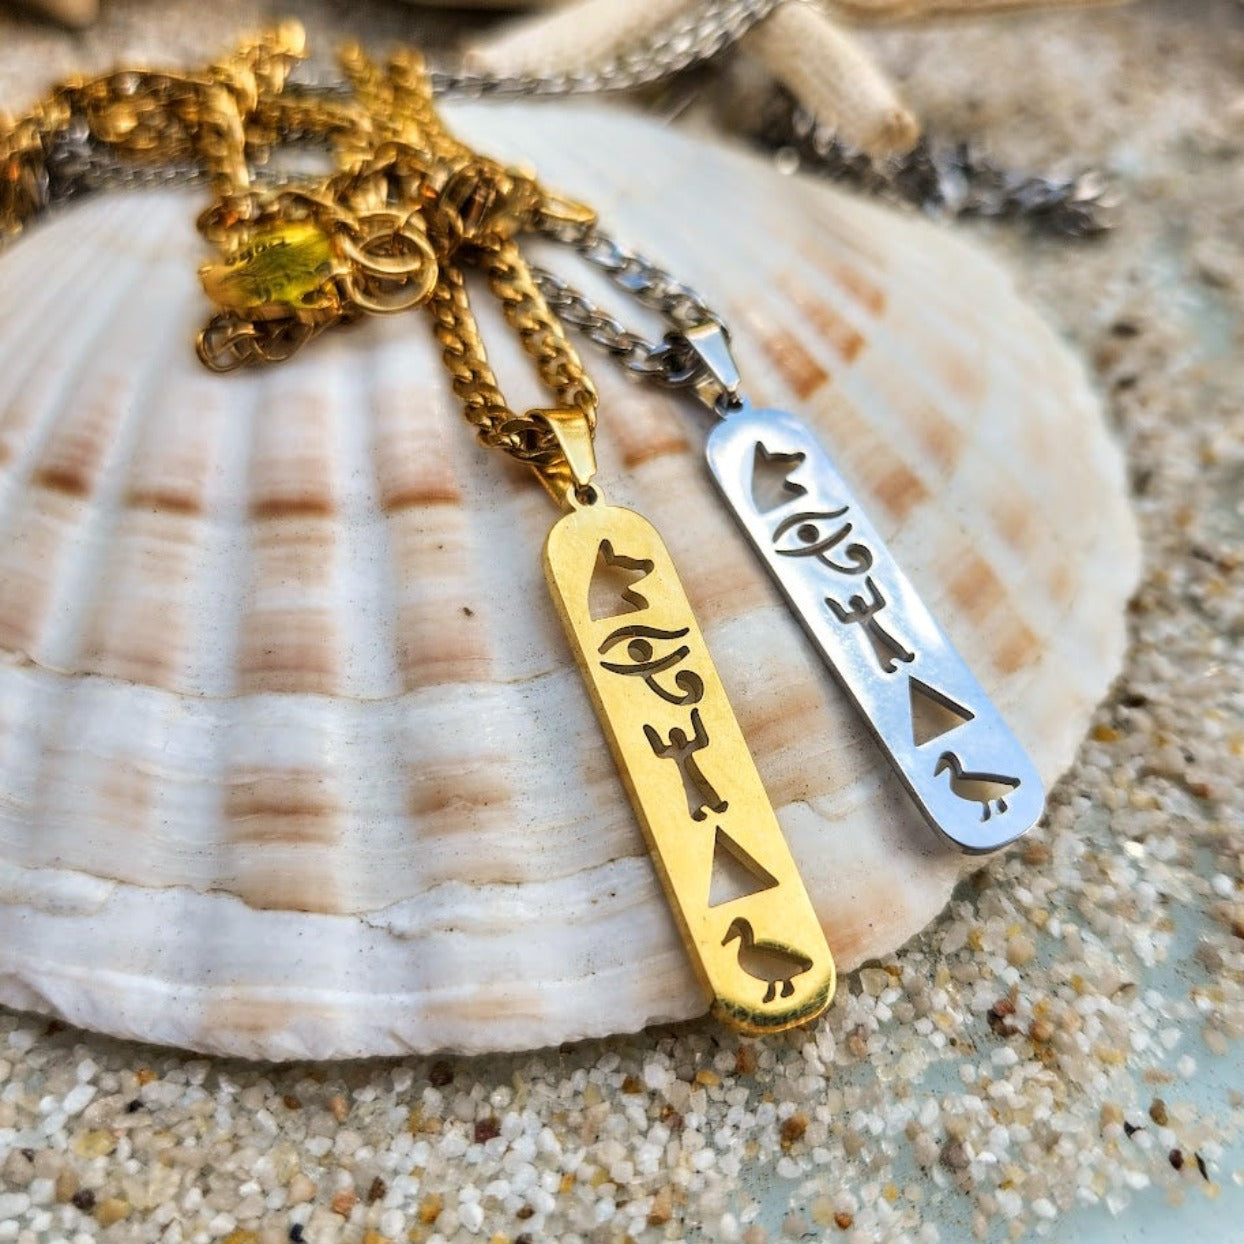 EGYPTIAN HIEROGLYPHIC MEN'S 18K GOLD OR SILVER WATERPROOF NECKLACE - Premium necklaces from www.beachboho.com.au - Just $60! Shop now at www.beachboho.com.au